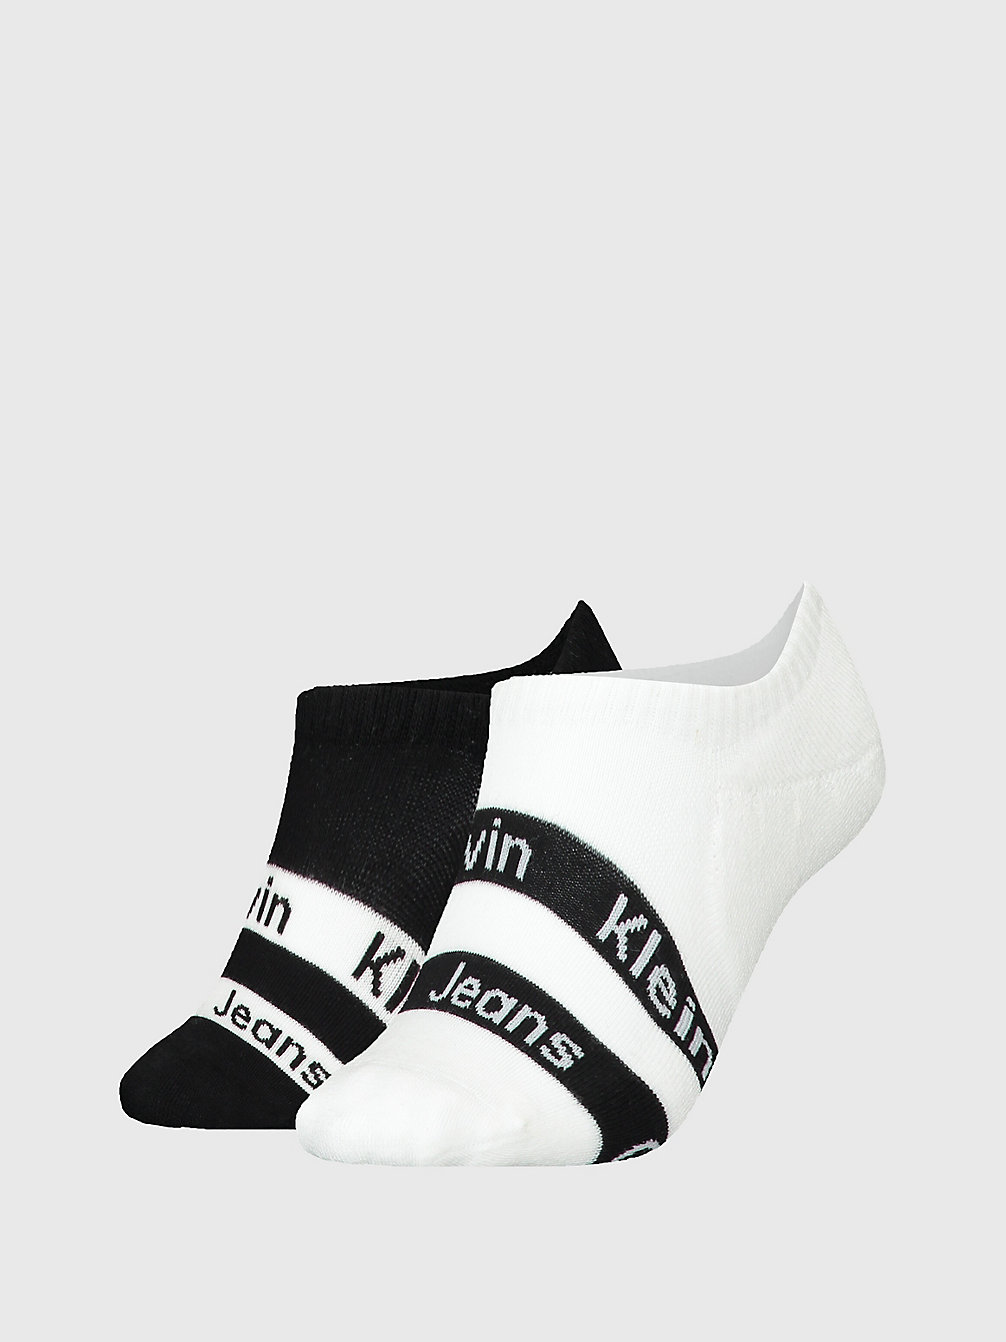 WHITE / BLACK 2 Pack Invisible Socks undefined women Calvin Klein